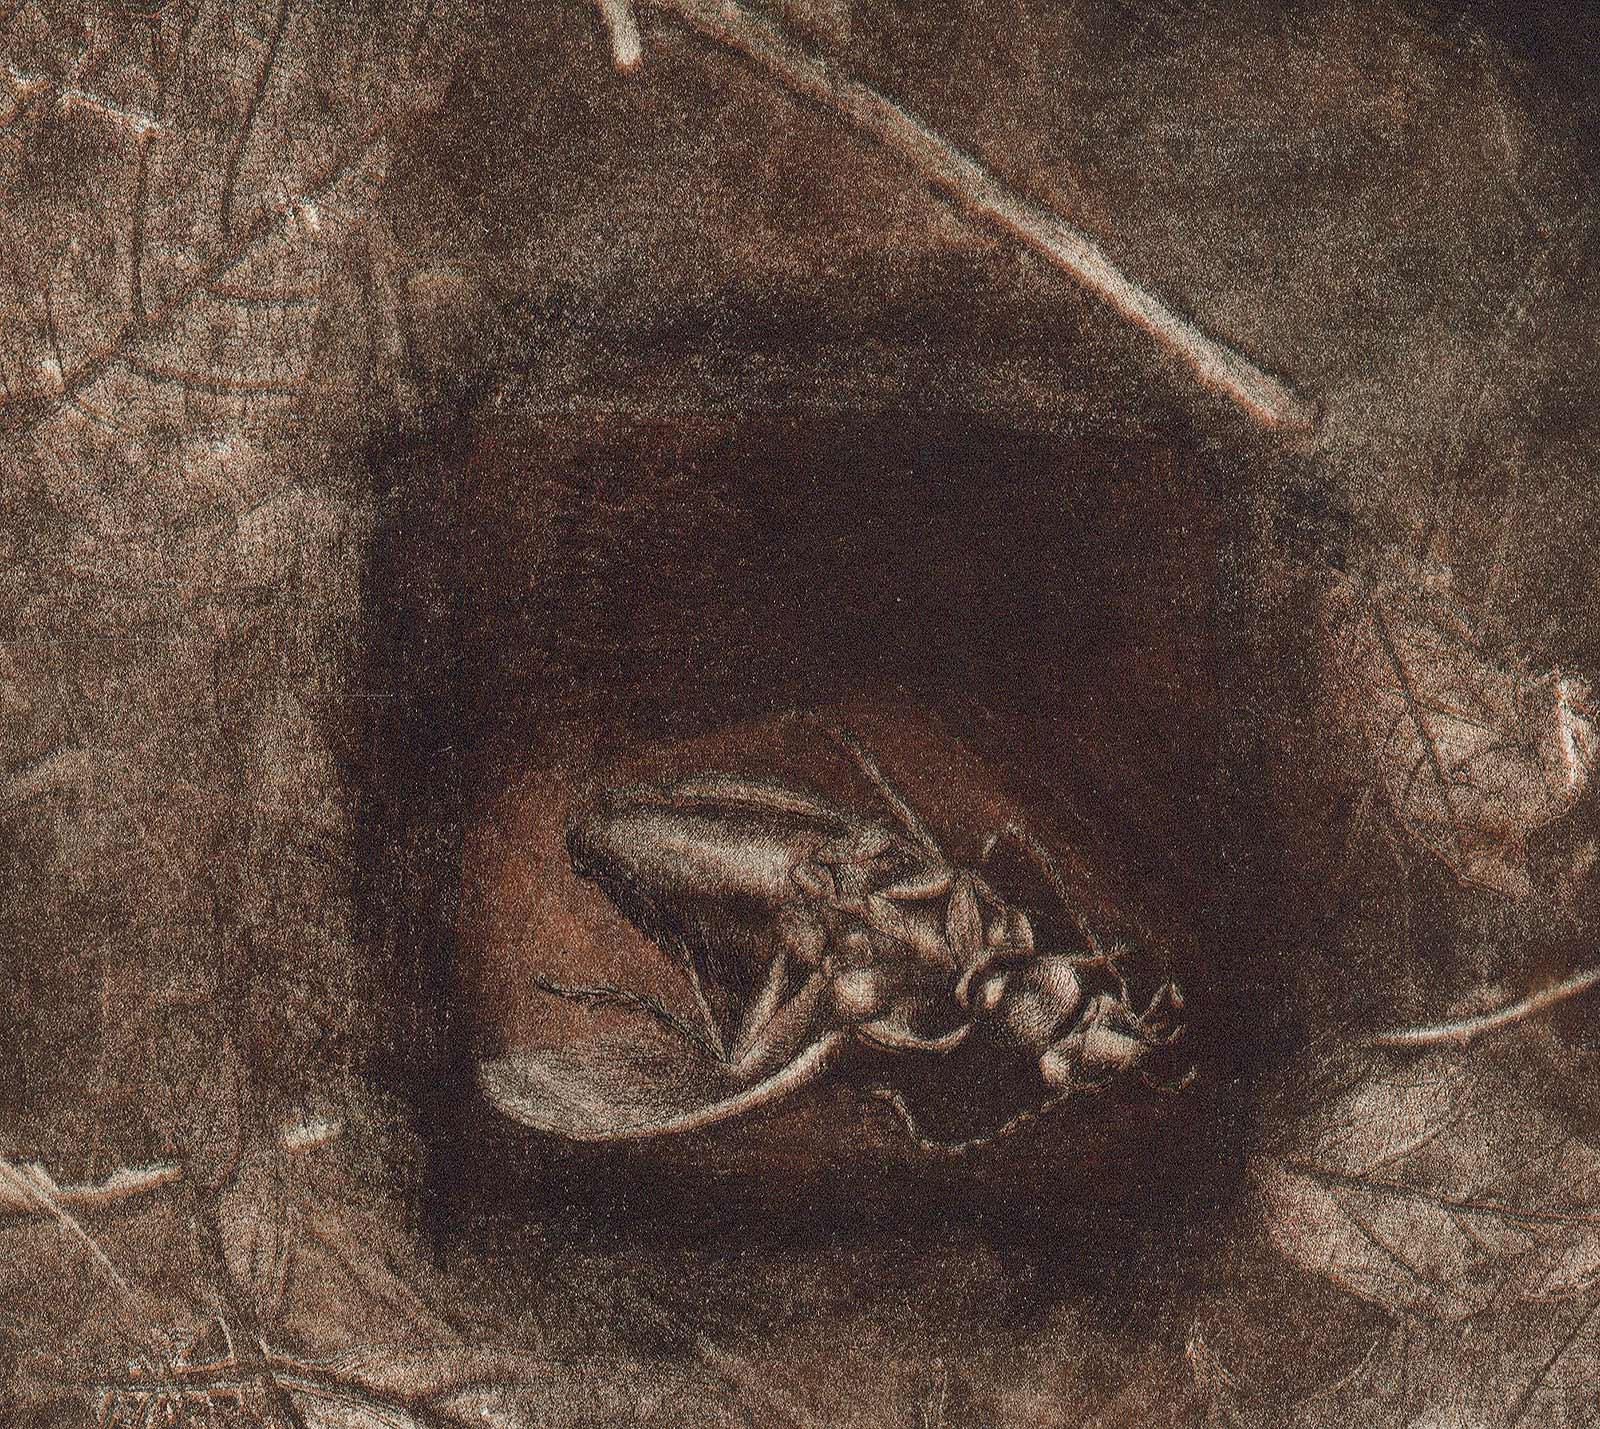 Crushed Beetle / Fragile-Serie – Print von Lois Ward